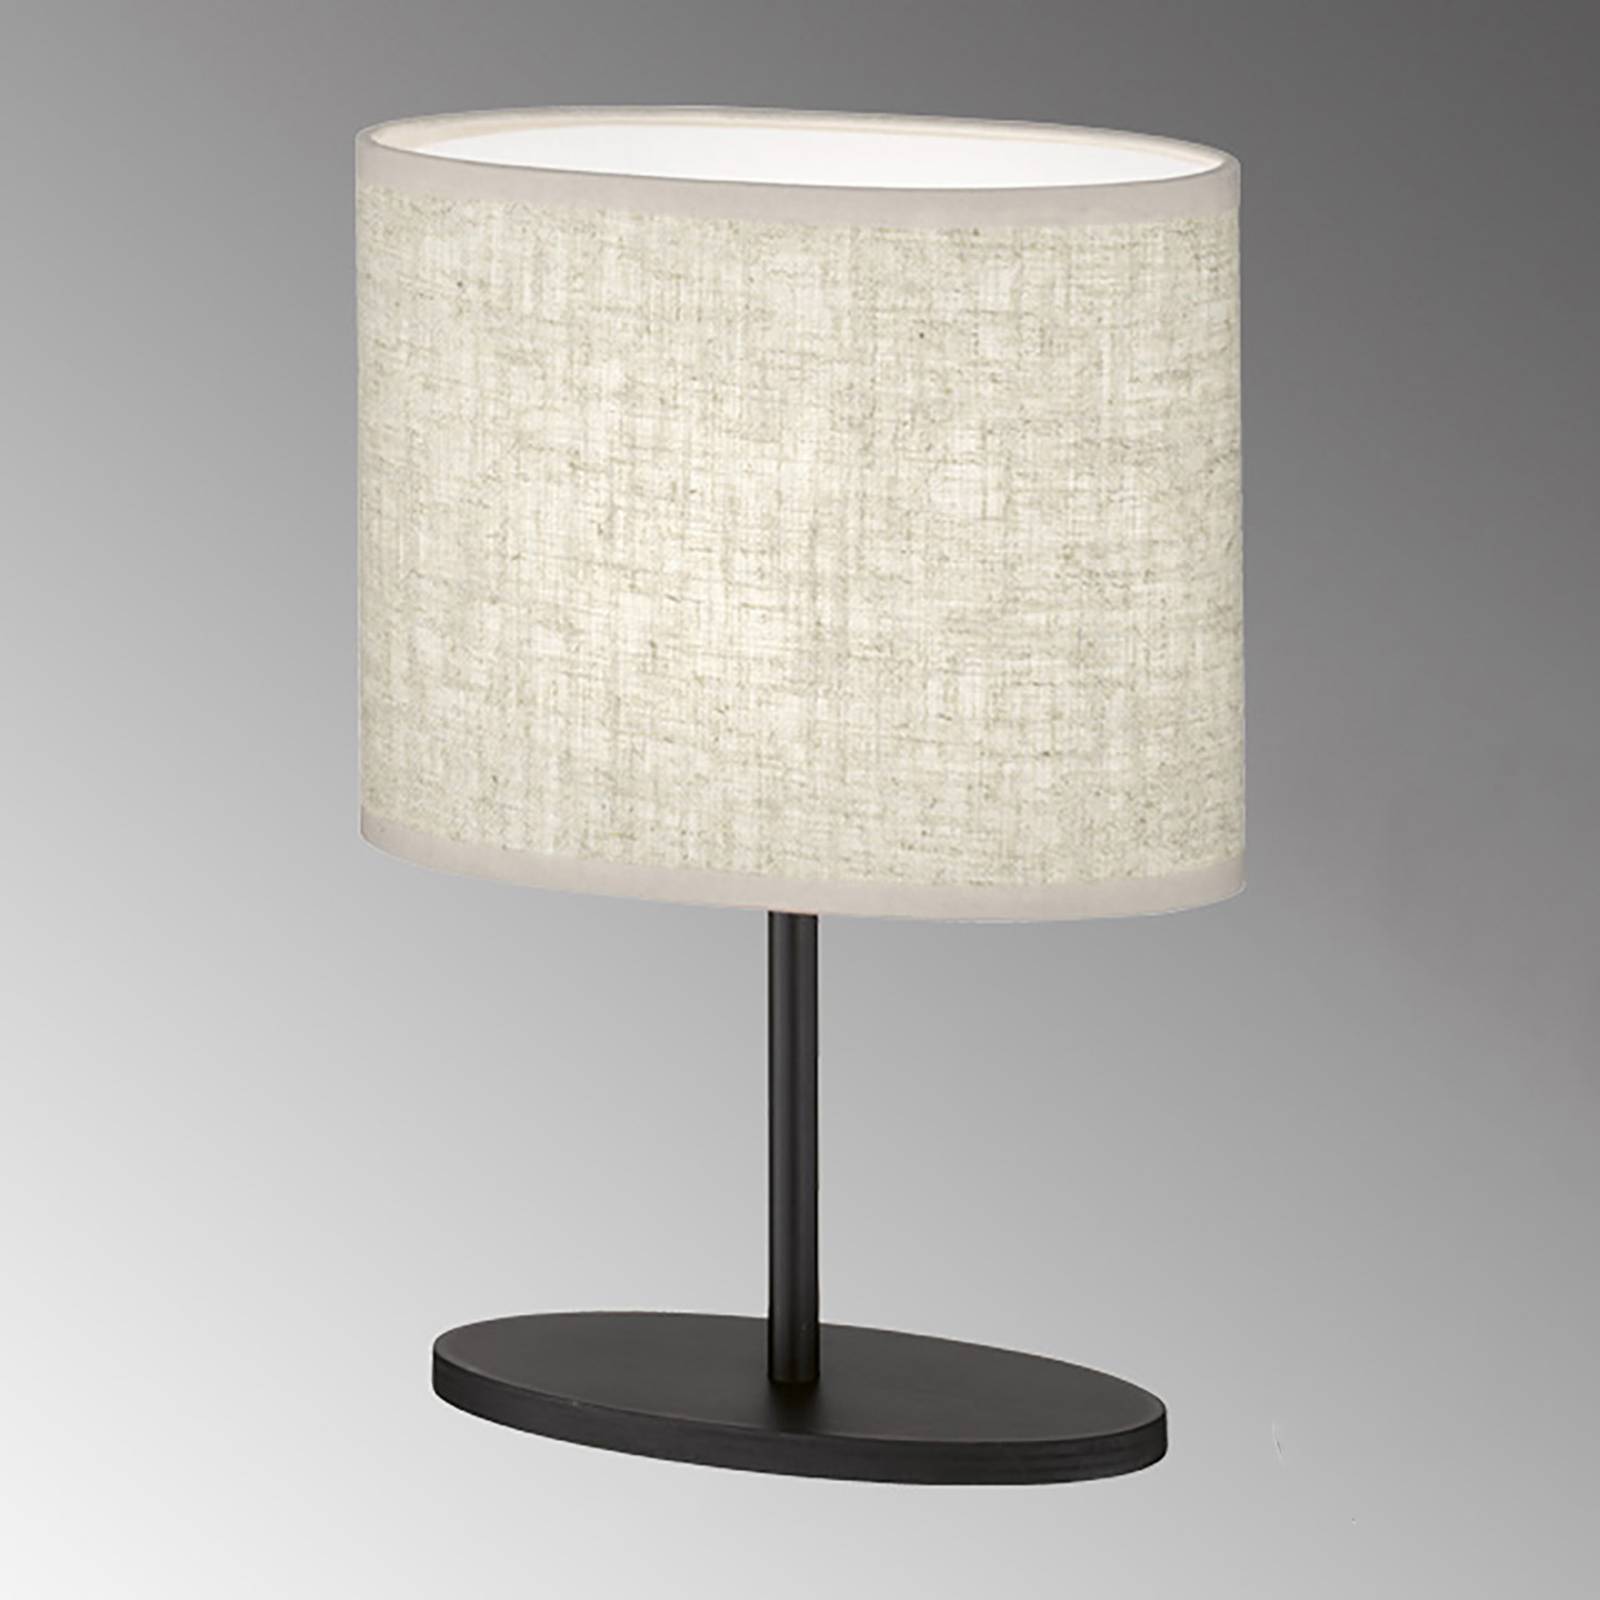 Image of FH Lighting Lampe à poser Momo, abat-jour tissu, noir/sable 4052231501111